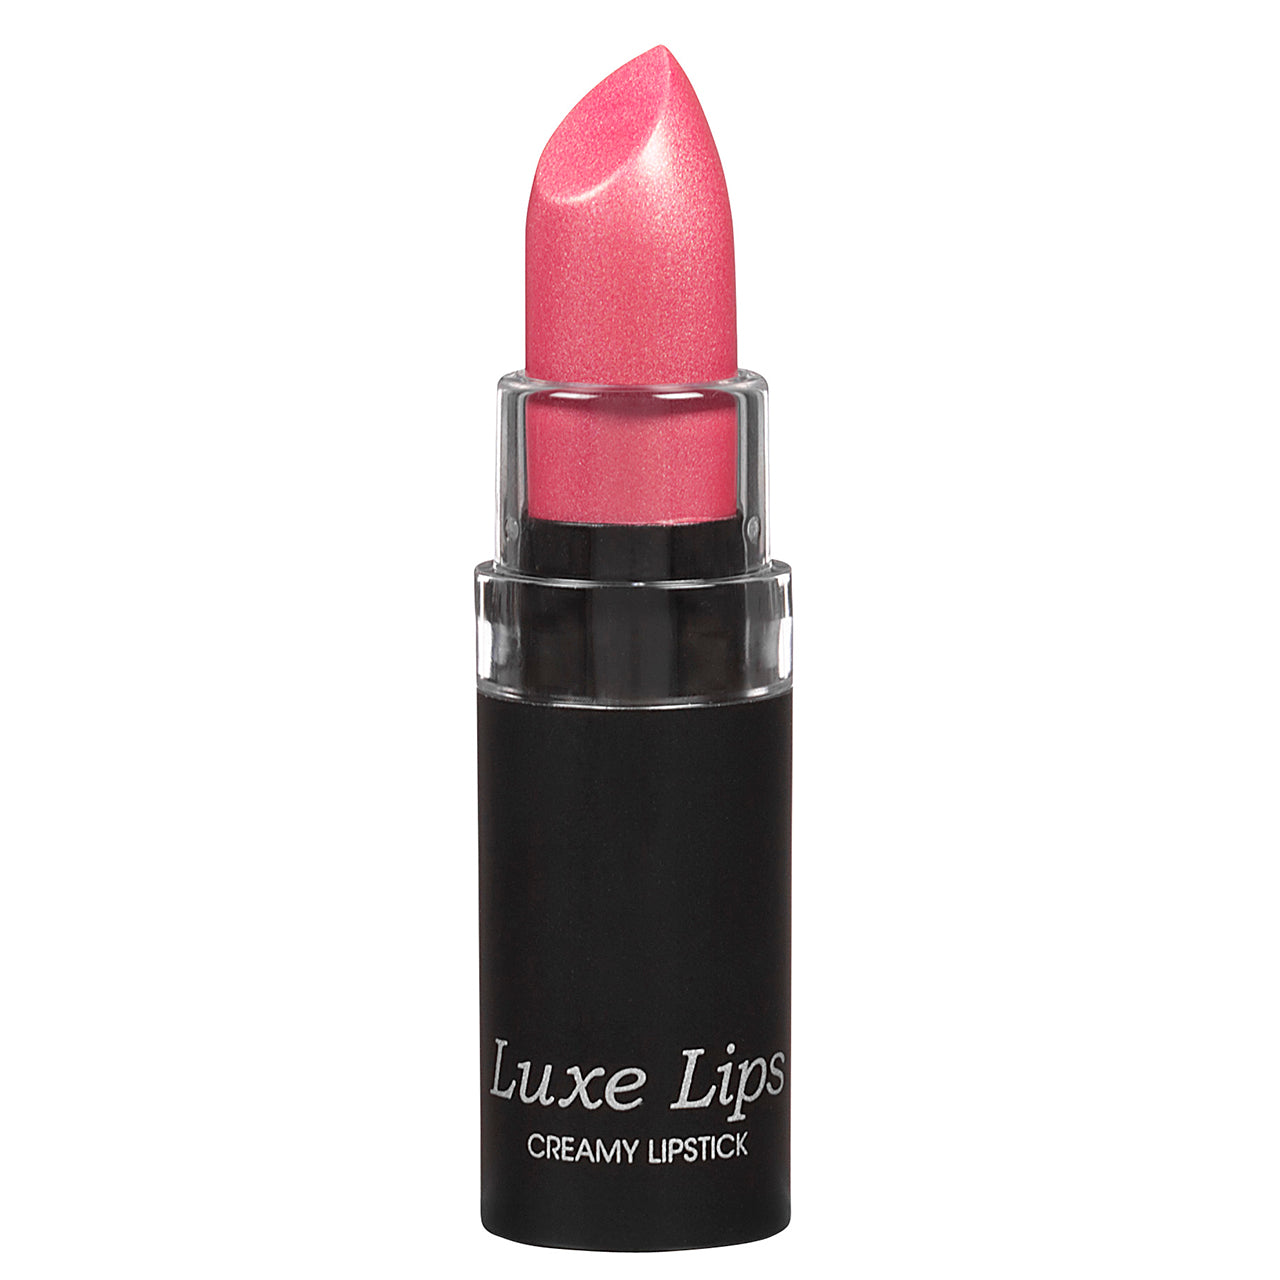 Styli-Style Cosmetics Luxe Lips Creamy Lipstick - CupCake - ADDROS.COM